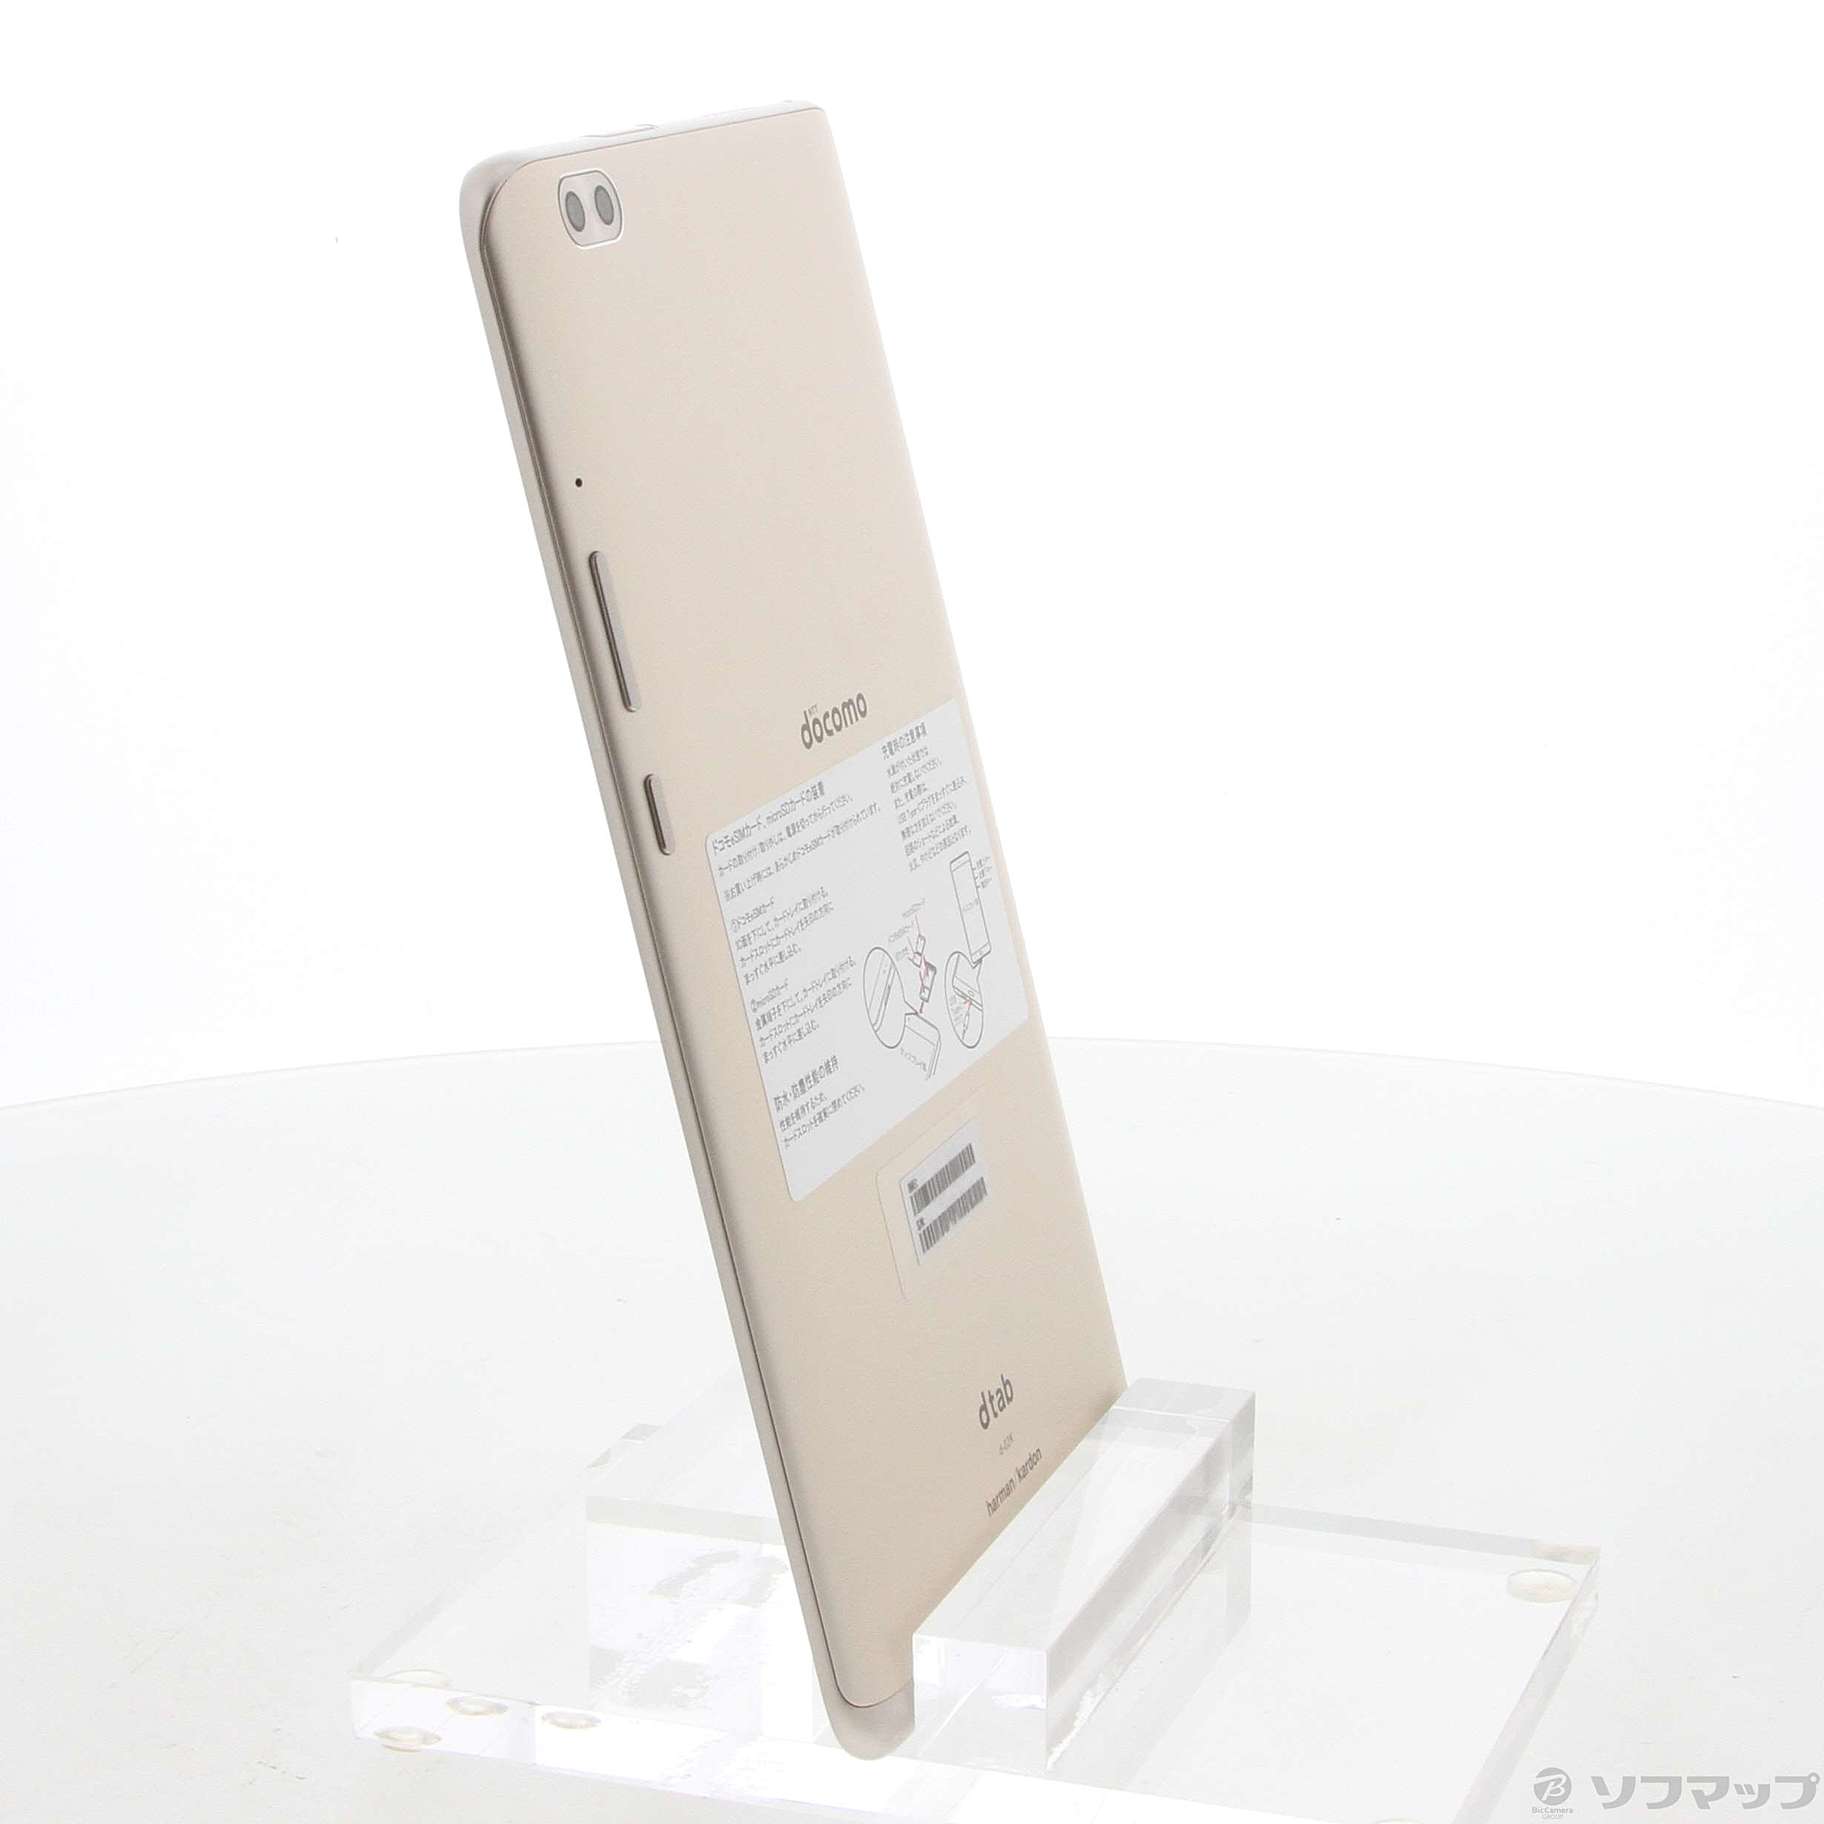 Huawei dtab Compact d-02K 32GB ゴールド